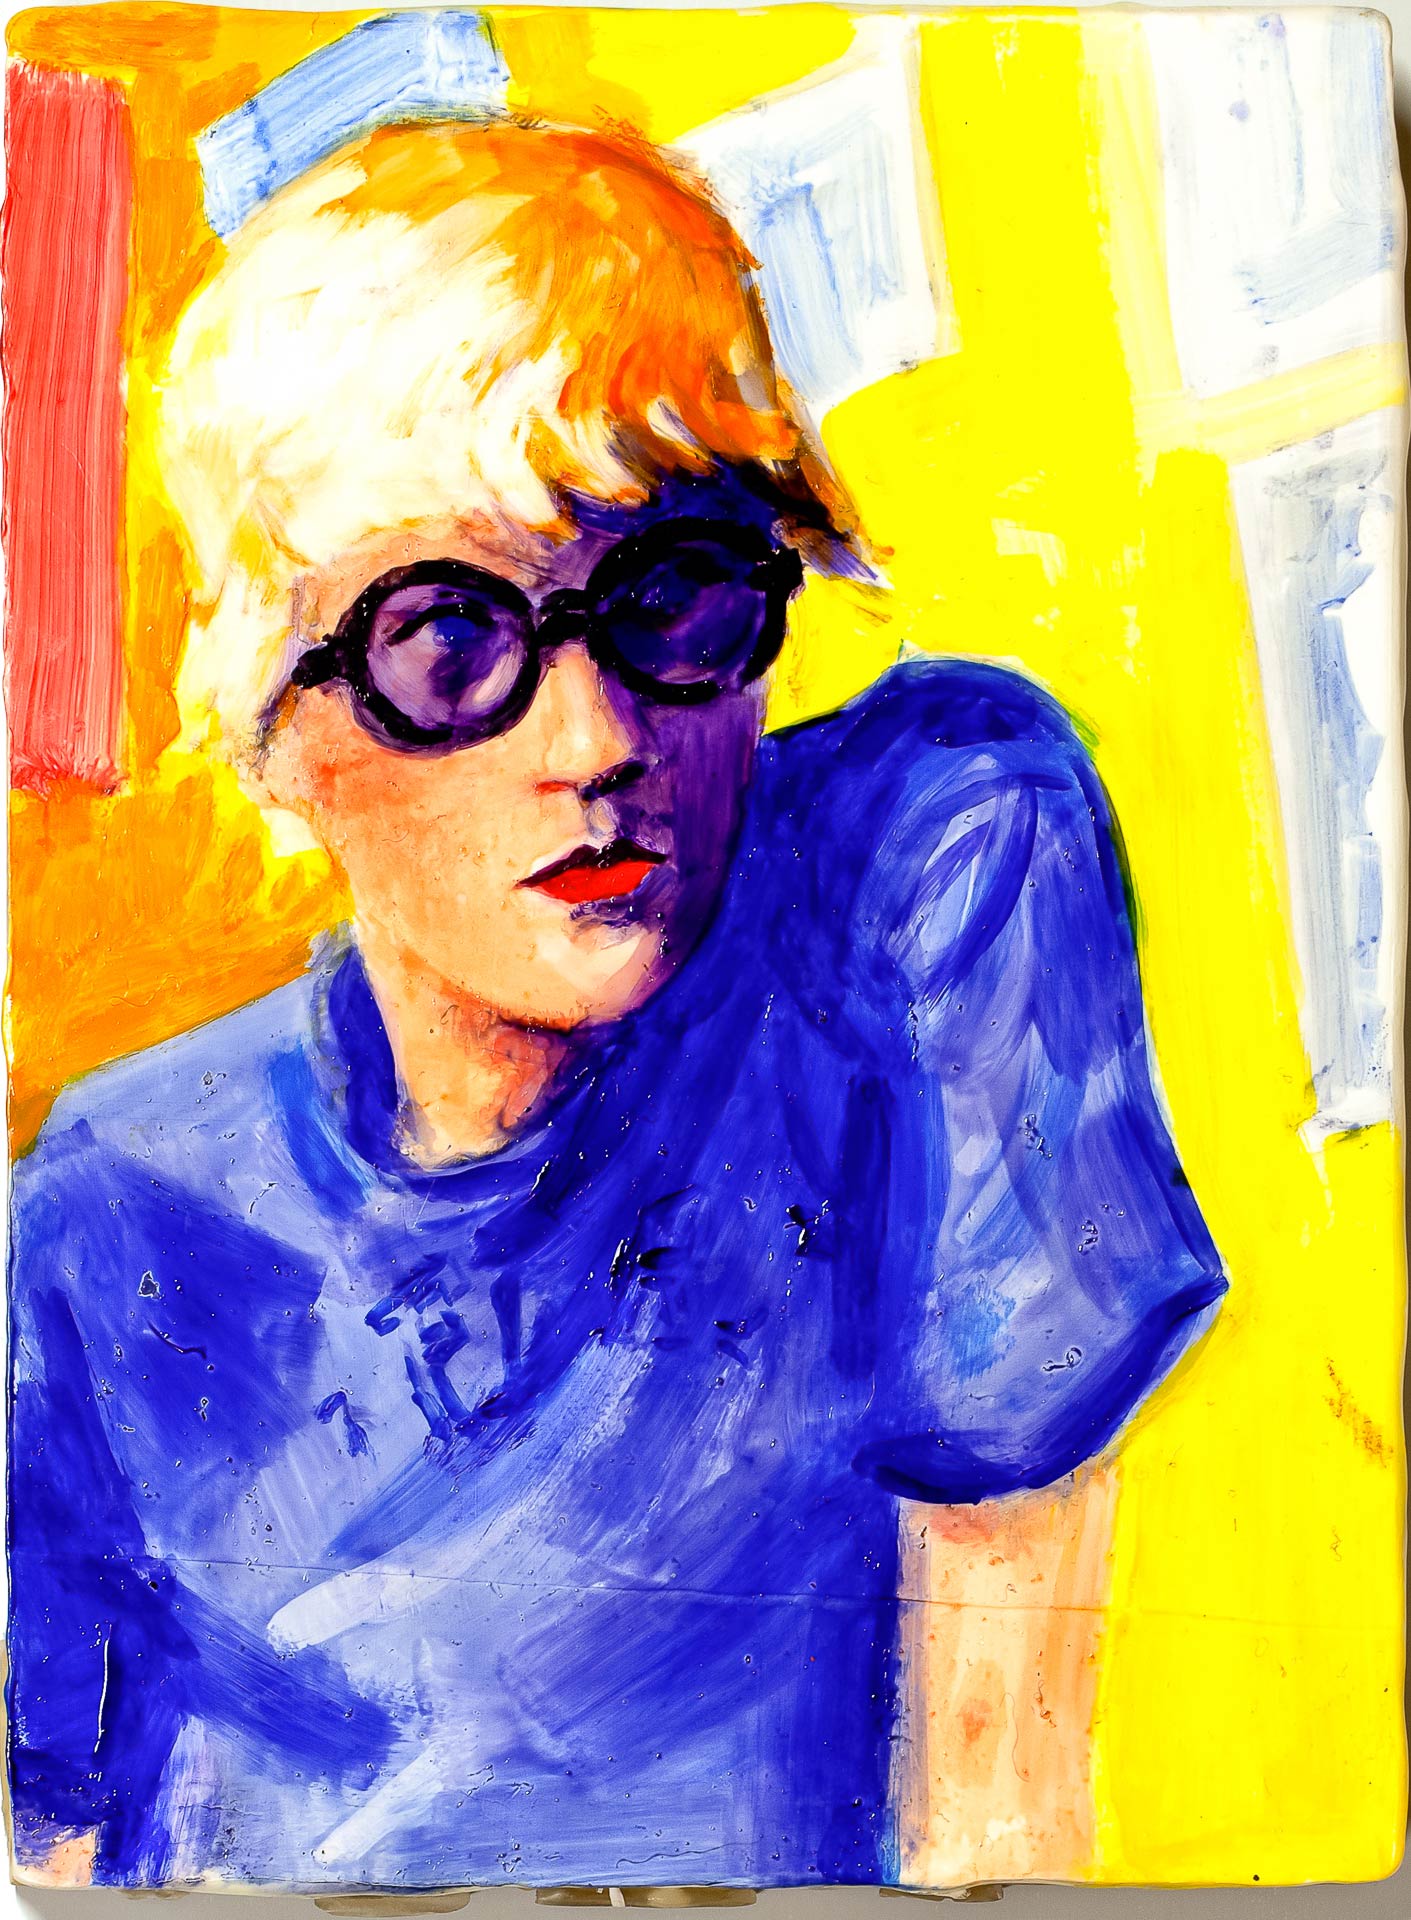 Abb. 4: Elizabeth Peyton, David Hockney, Powis Tarrace Bedroom, 1998 online Unterricht im Fach Kunst 